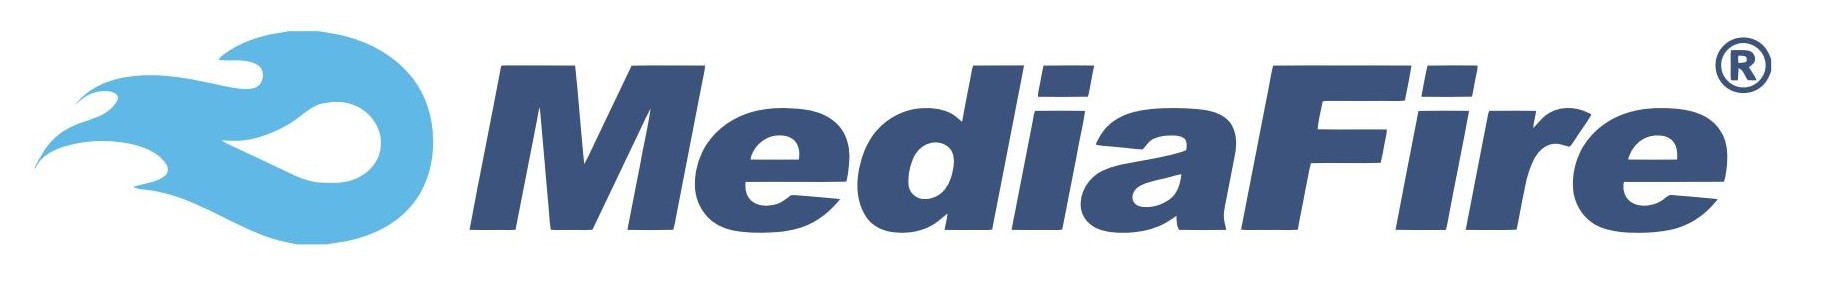 MediaFire Logo [EPS File]